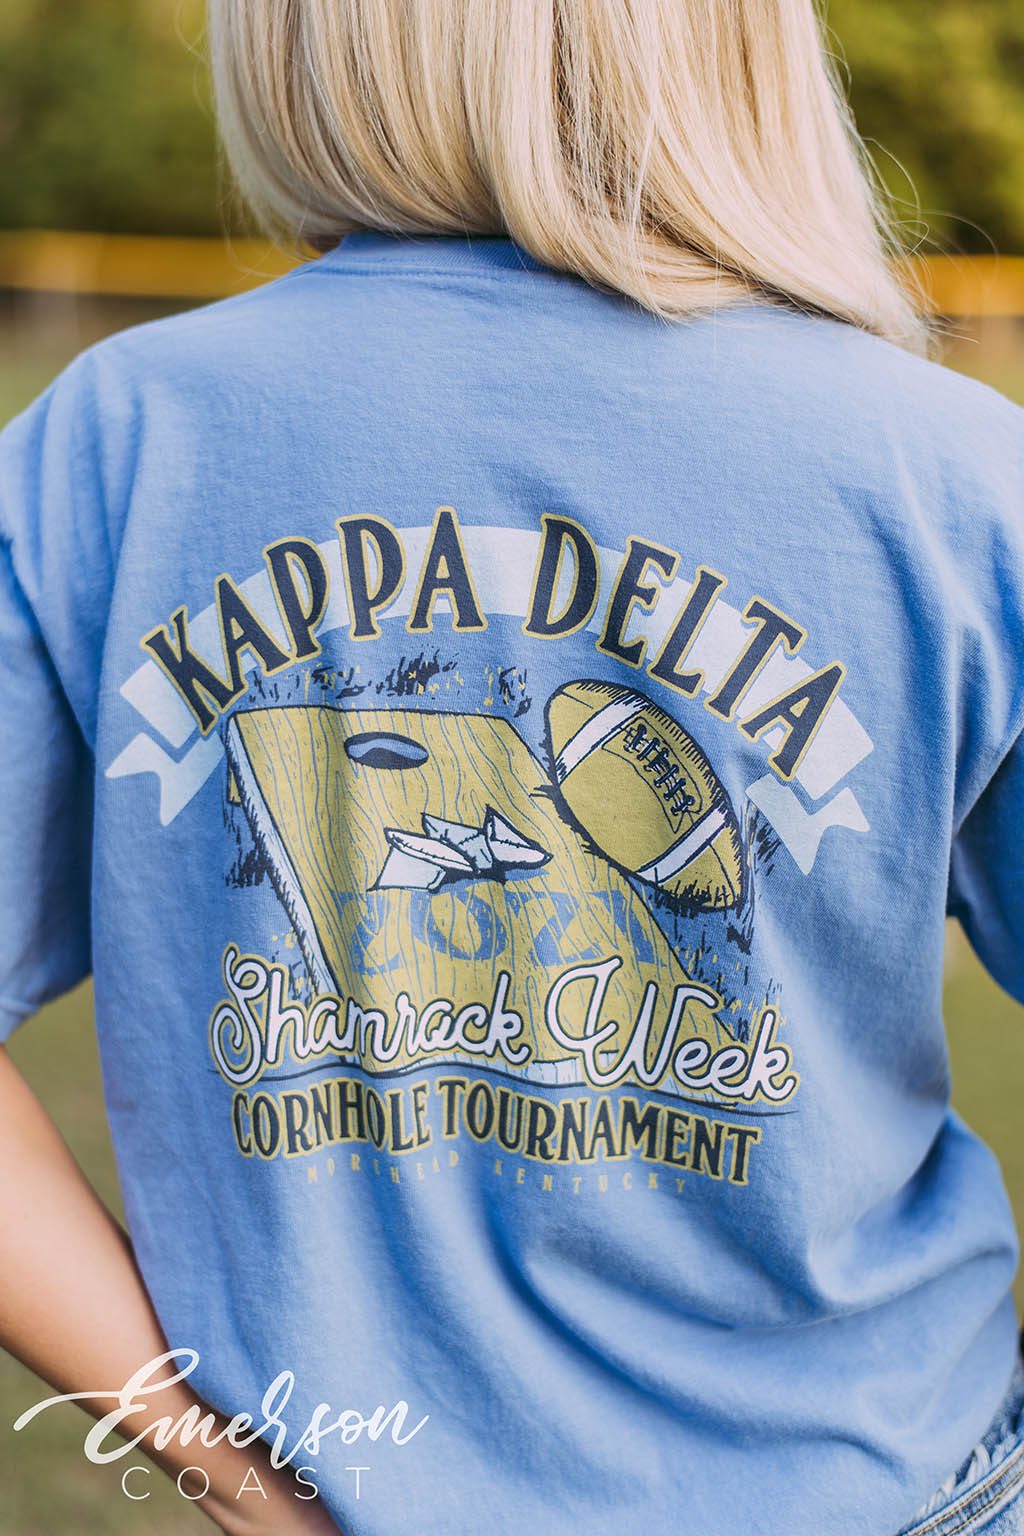 Kappa Delta Shamrock Week Cornhole Tournament Tee